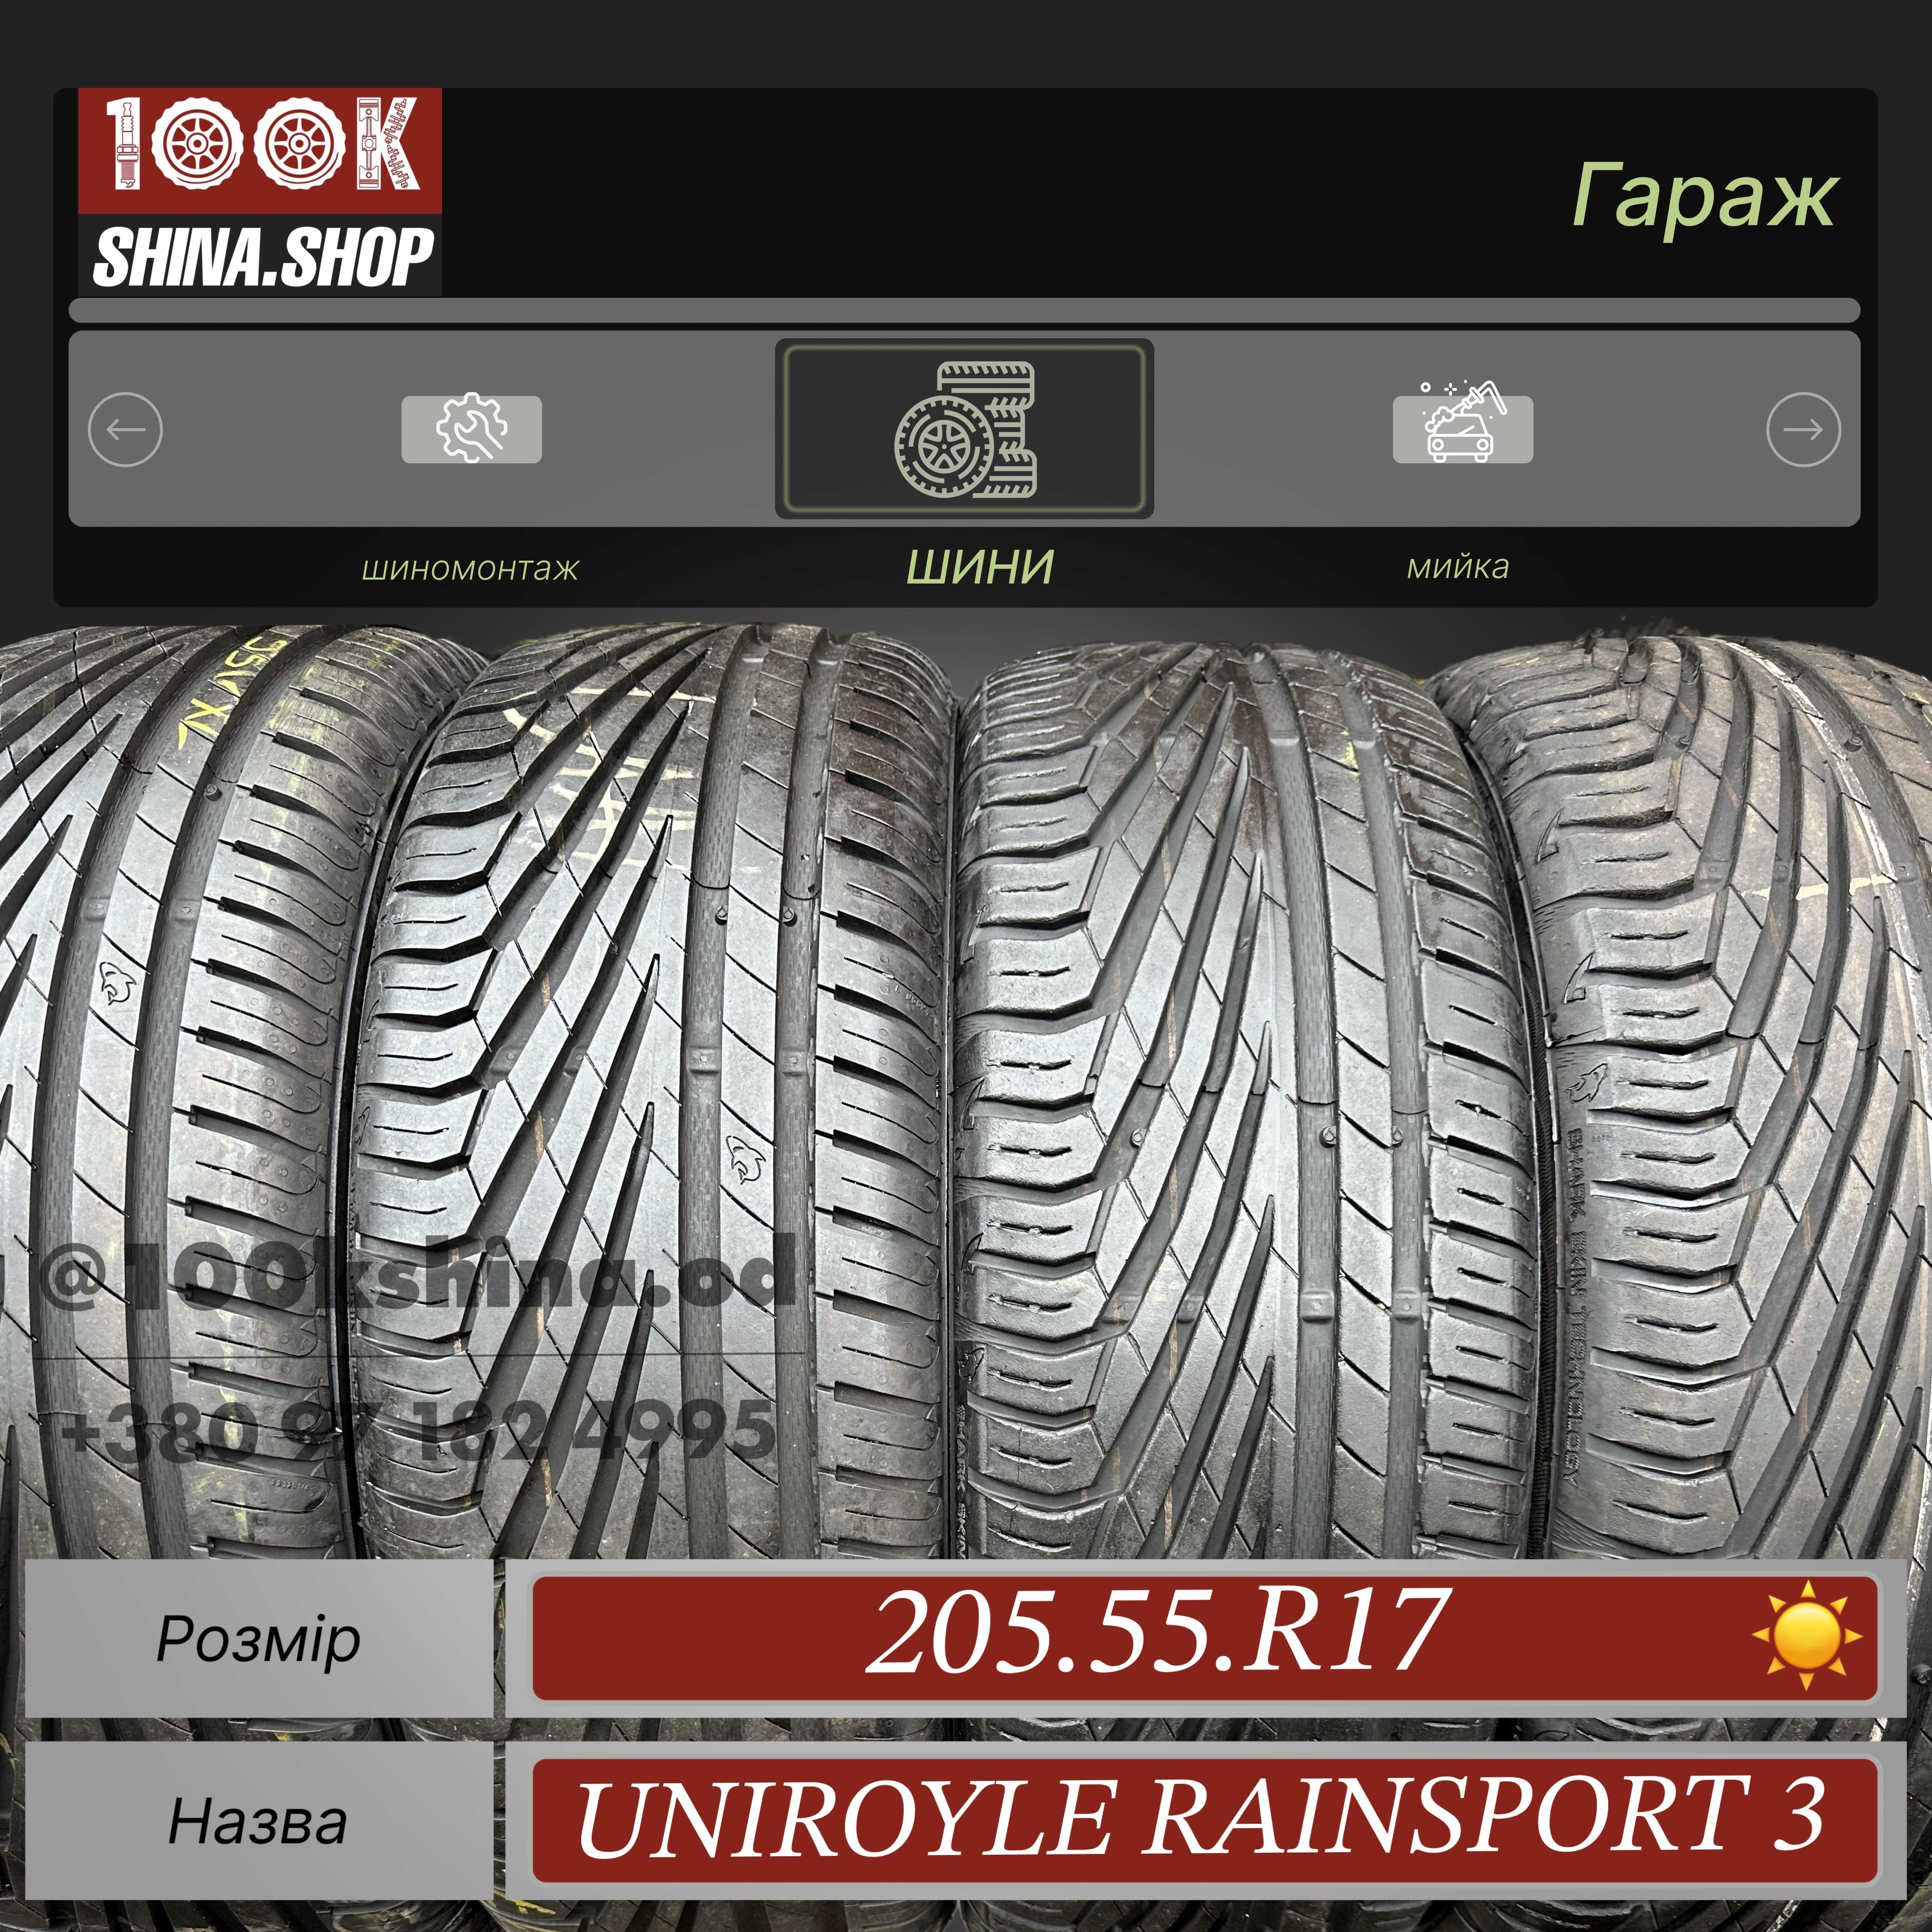 Шин БУ 205 55 R 17 Uniroyal Rainsport 3 Резина лето